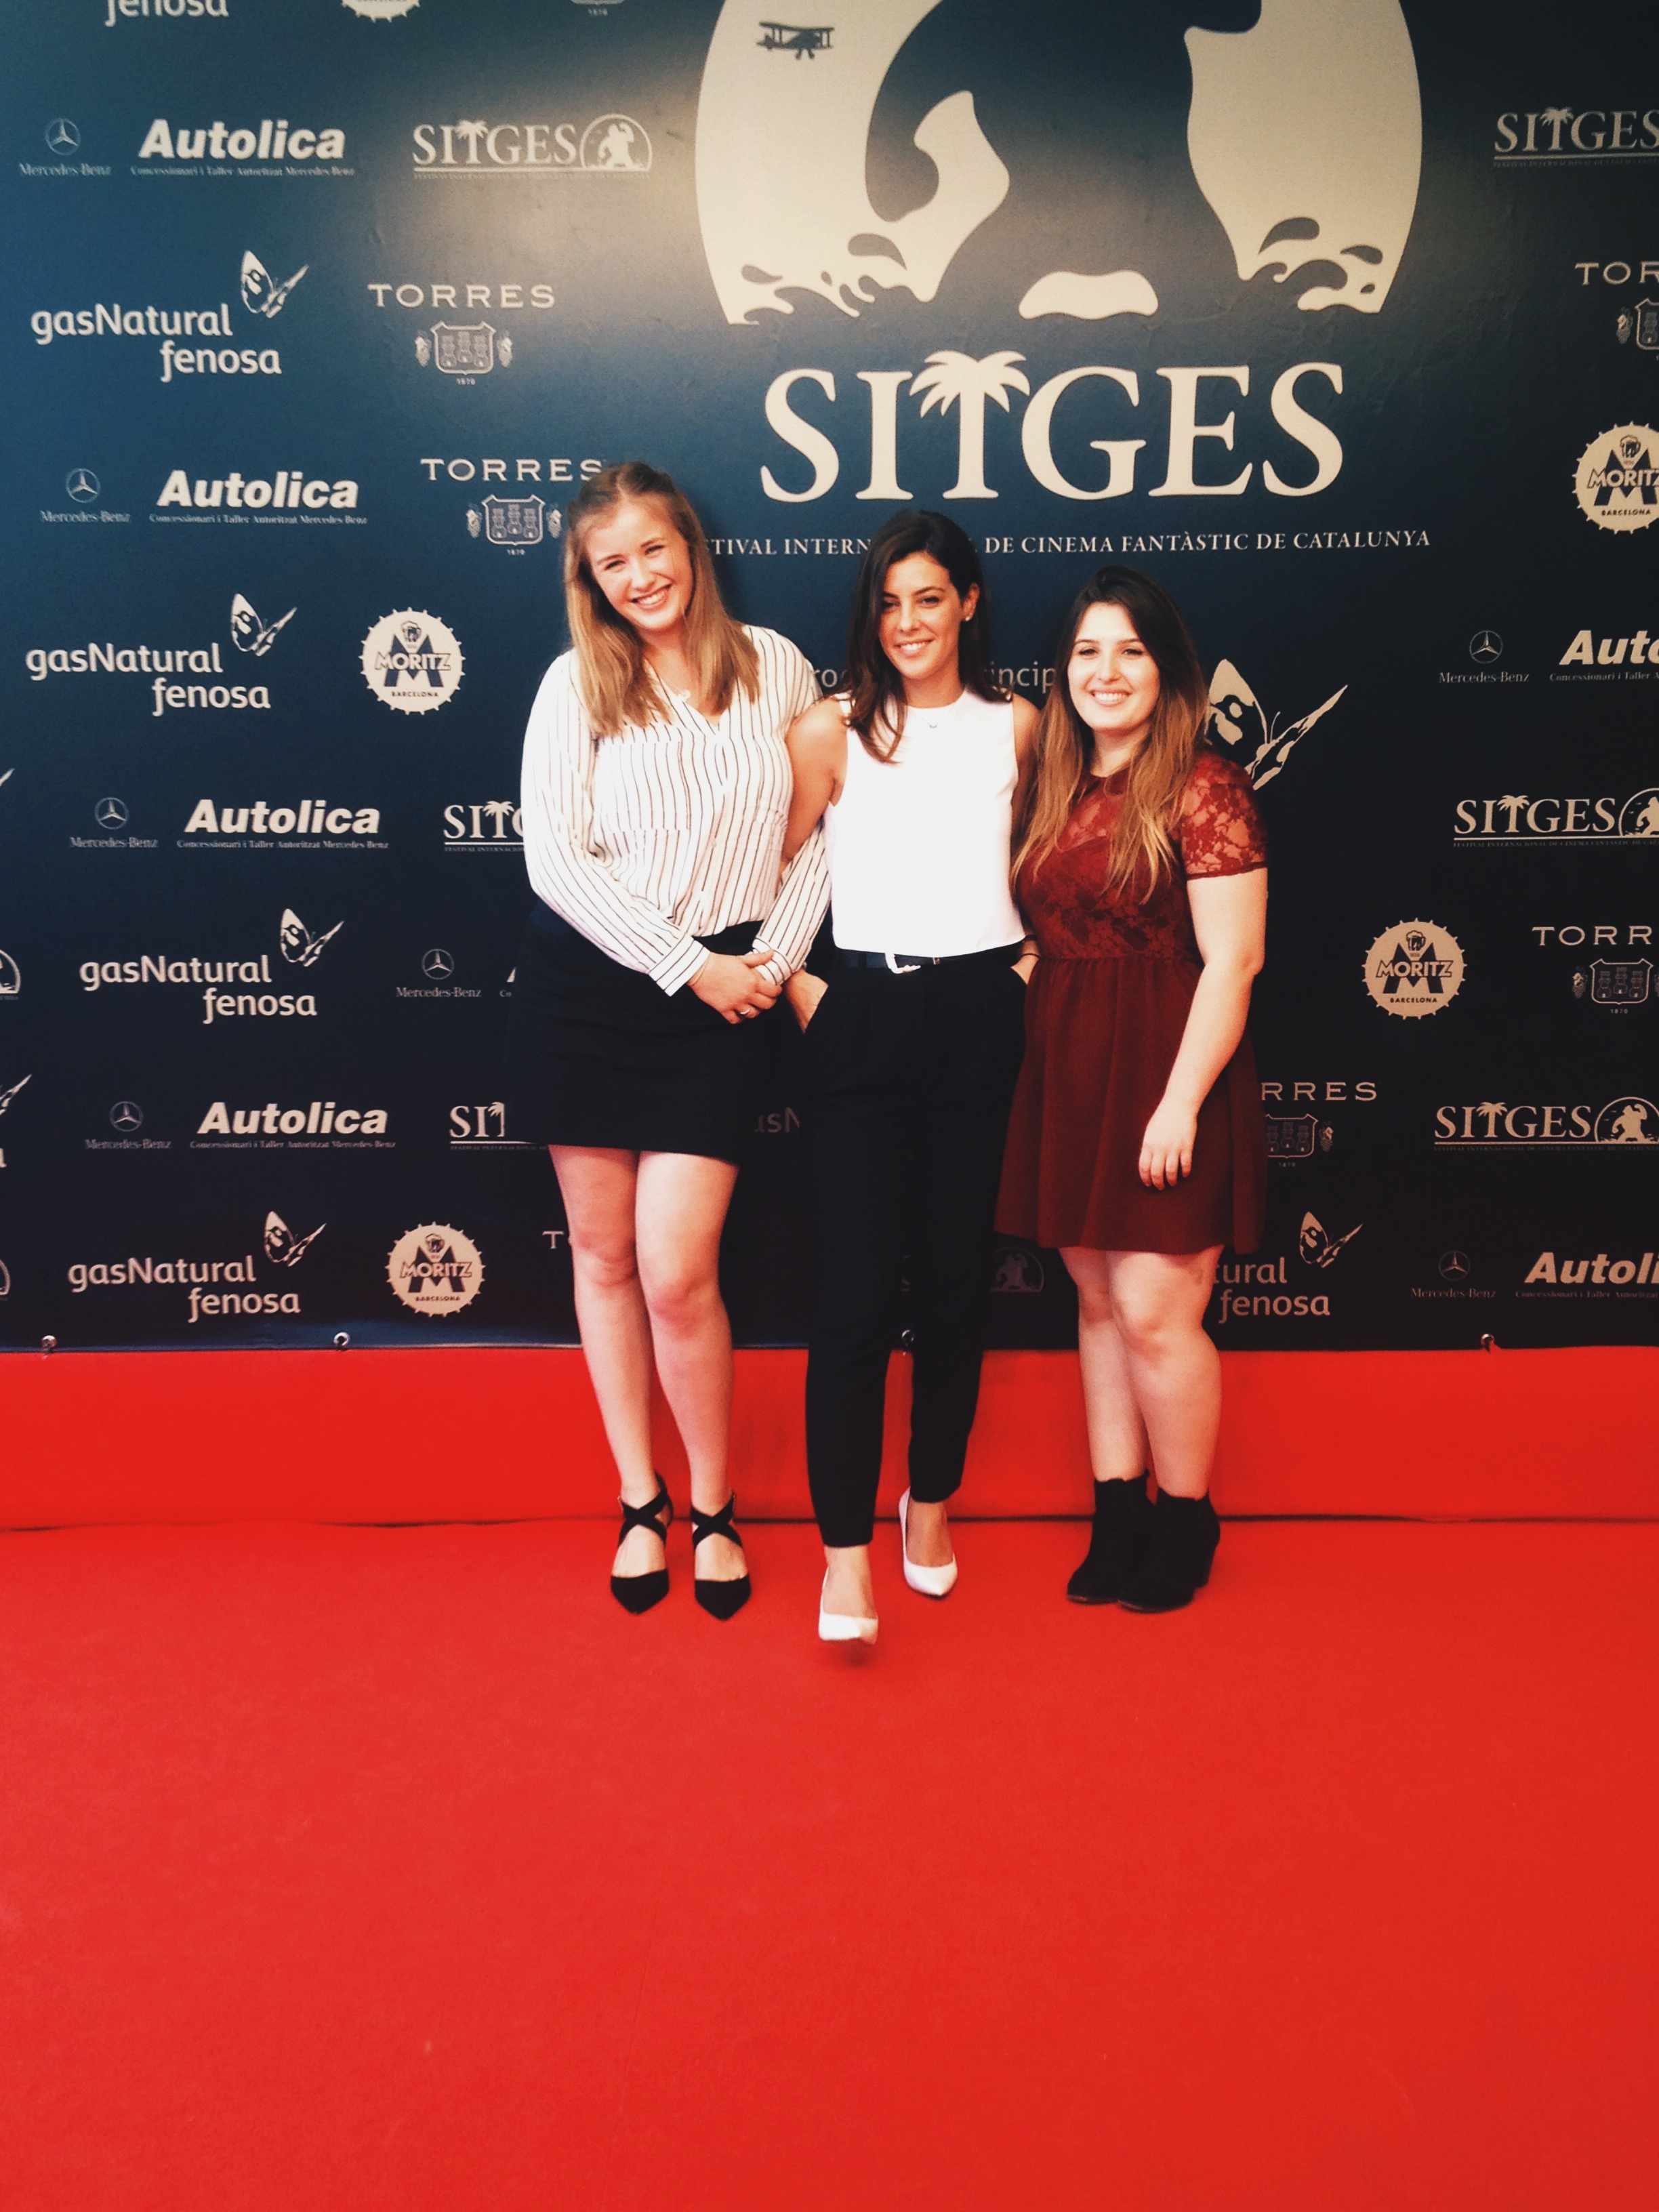 Sitges Film Festival 2014